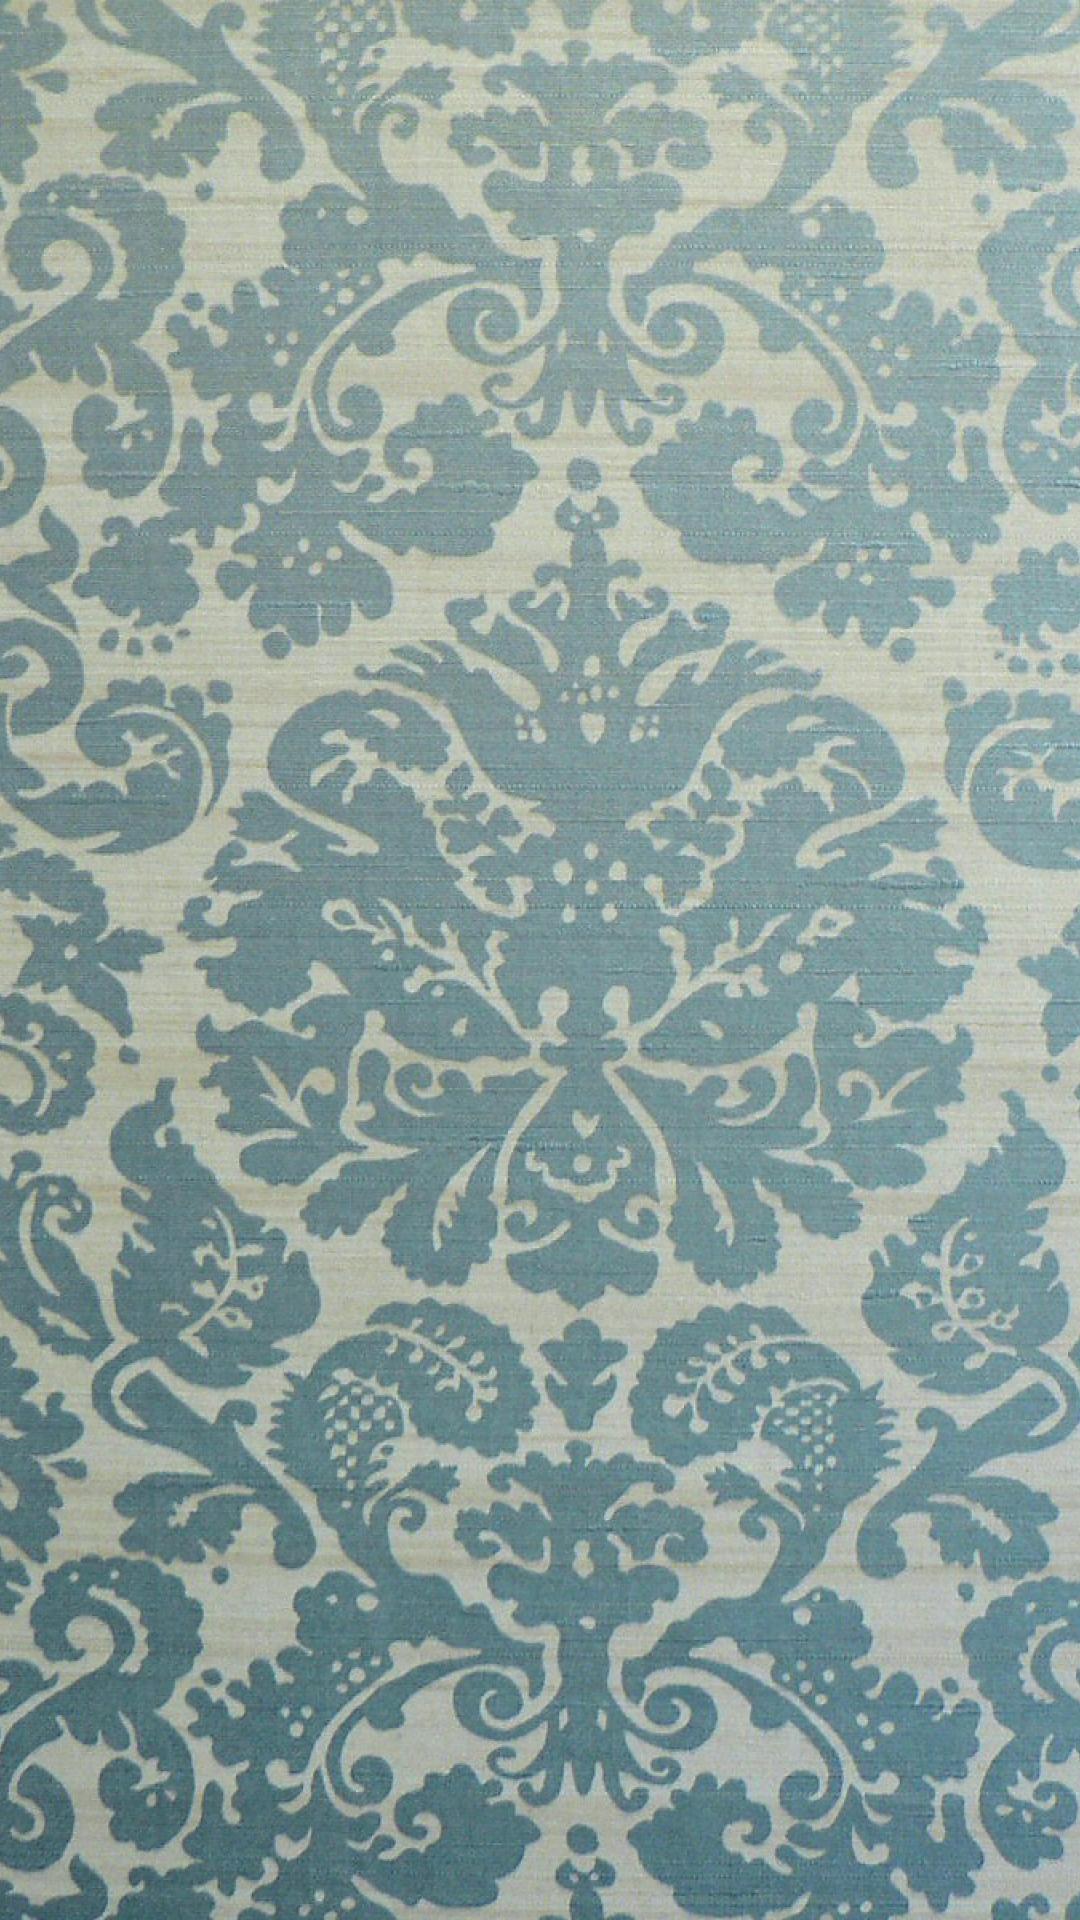 vintage iphone wallpaper,green,blue,pattern,aqua,teal